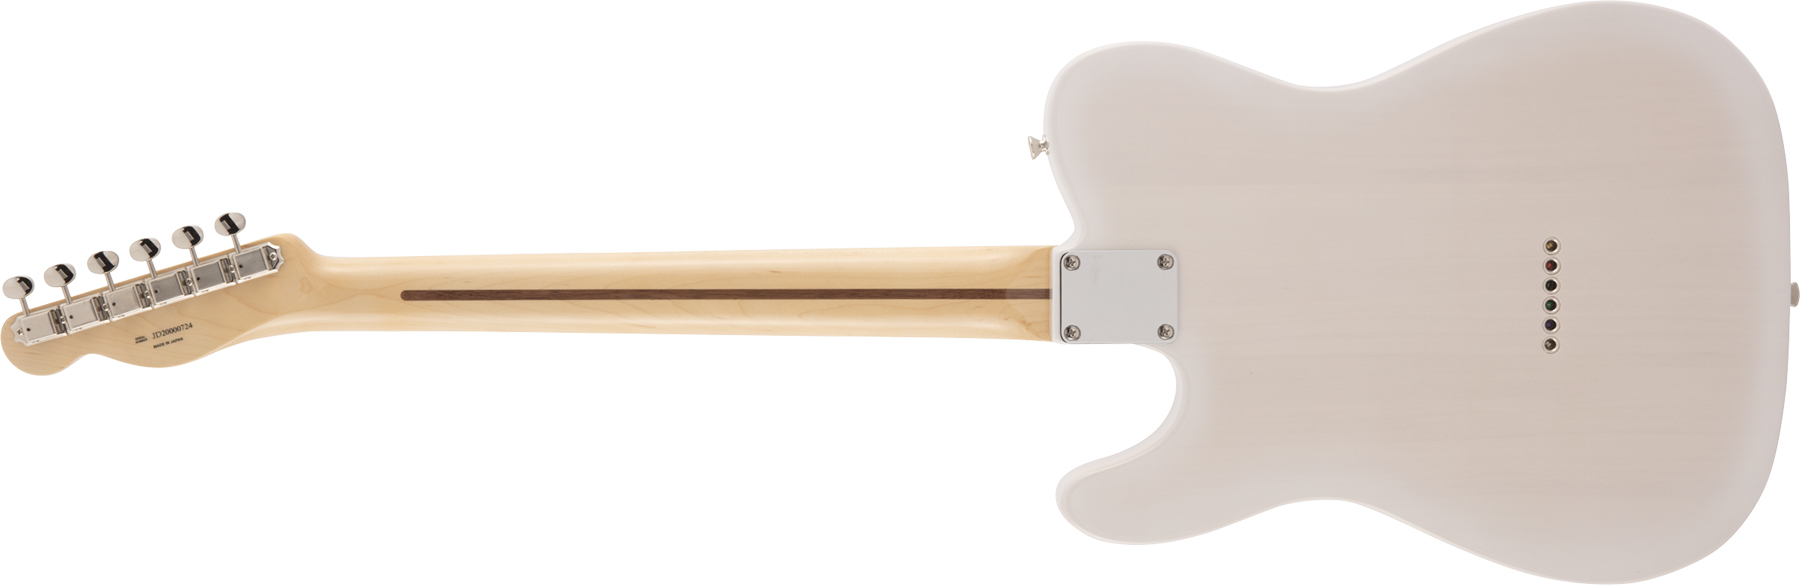 Fender Tele Traditional 50s Jap Mn - White Blonde - Televorm elektrische gitaar - Variation 1